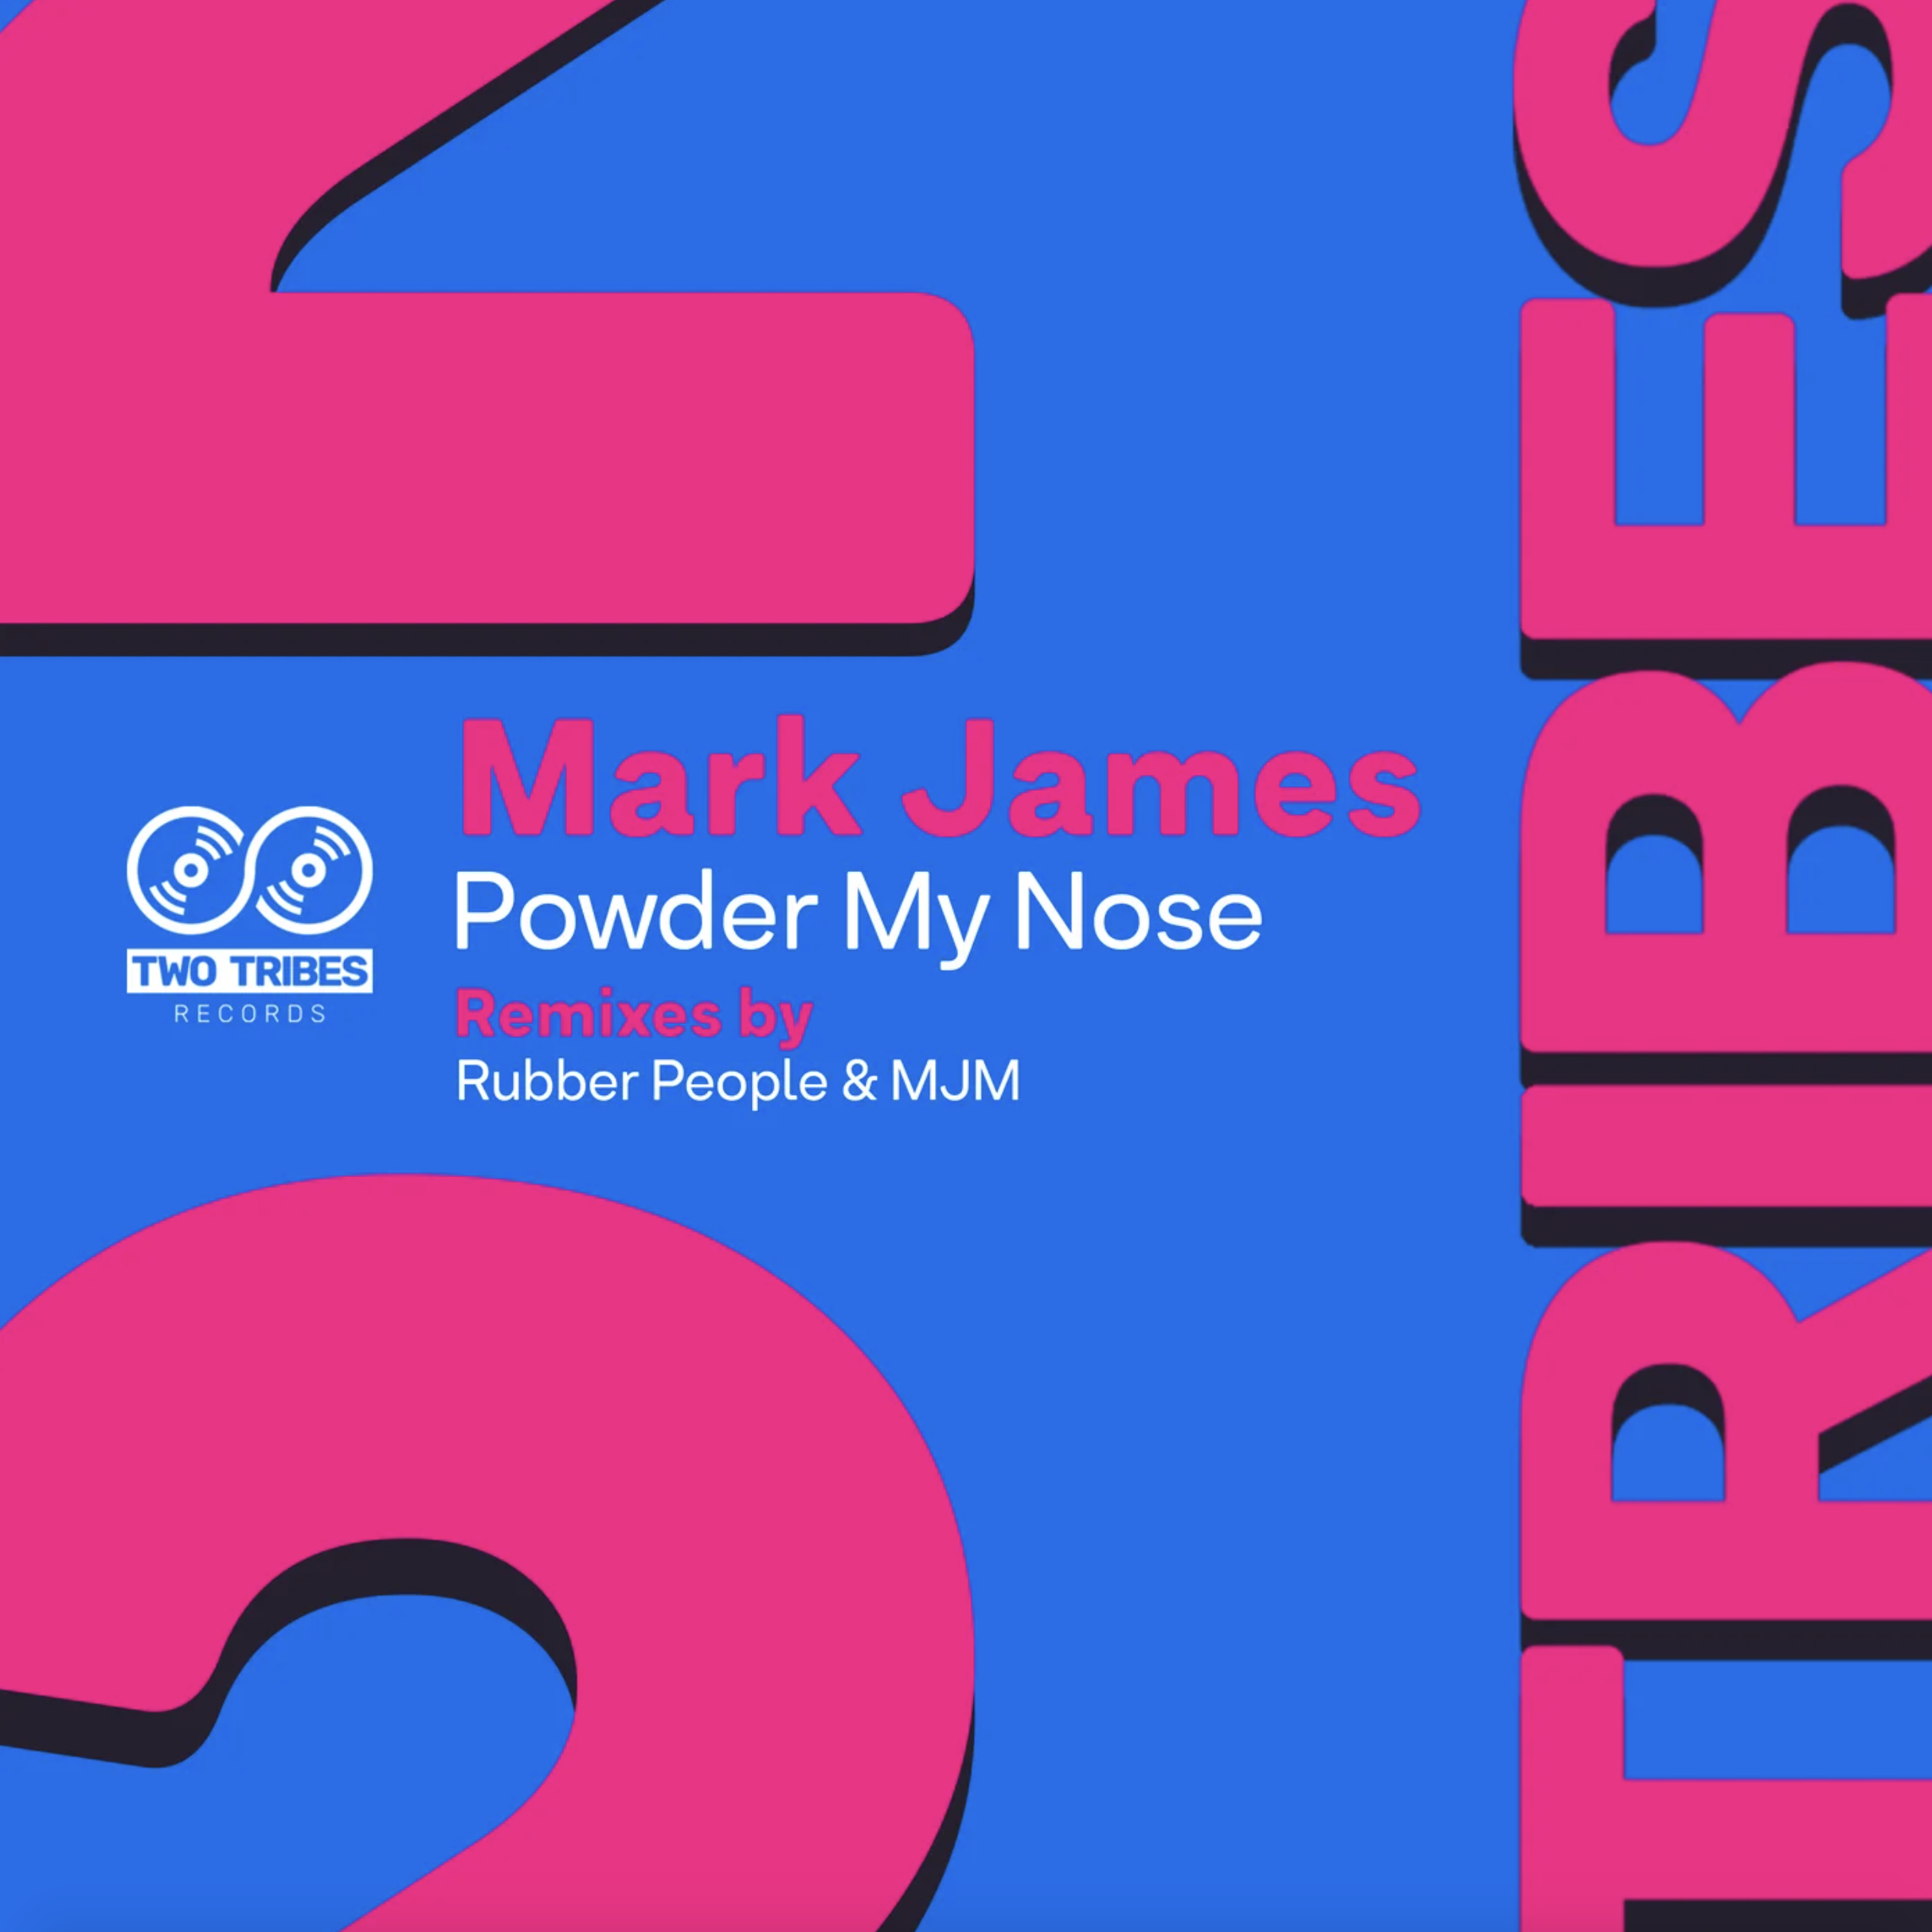 Powder My Nose